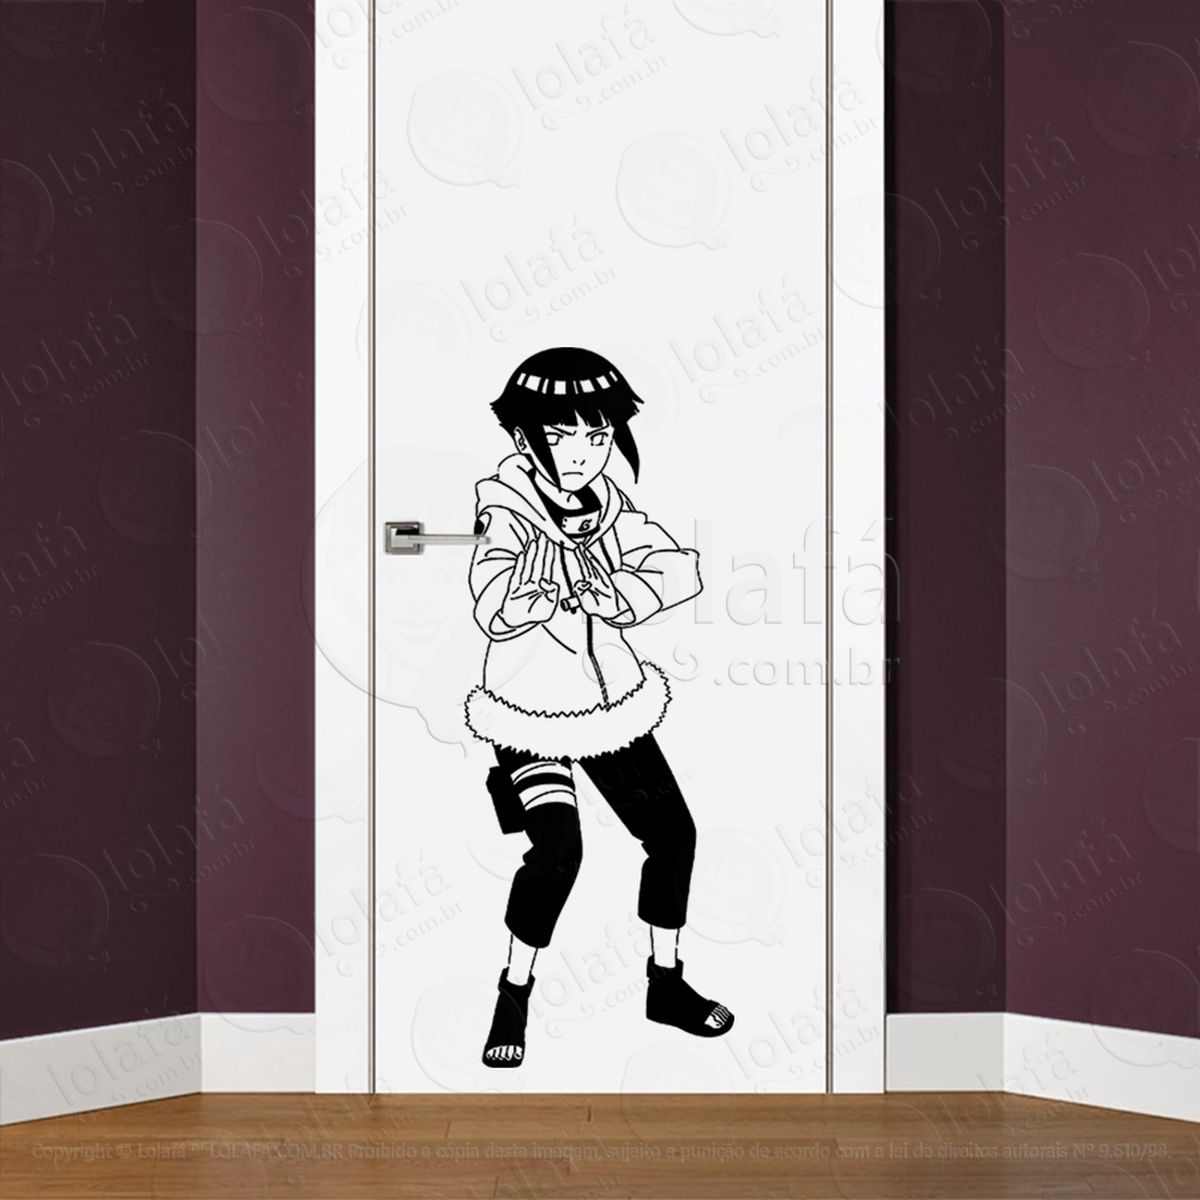 hinata hyuga adesivo de parede para quarto, porta e vidro - mod:173